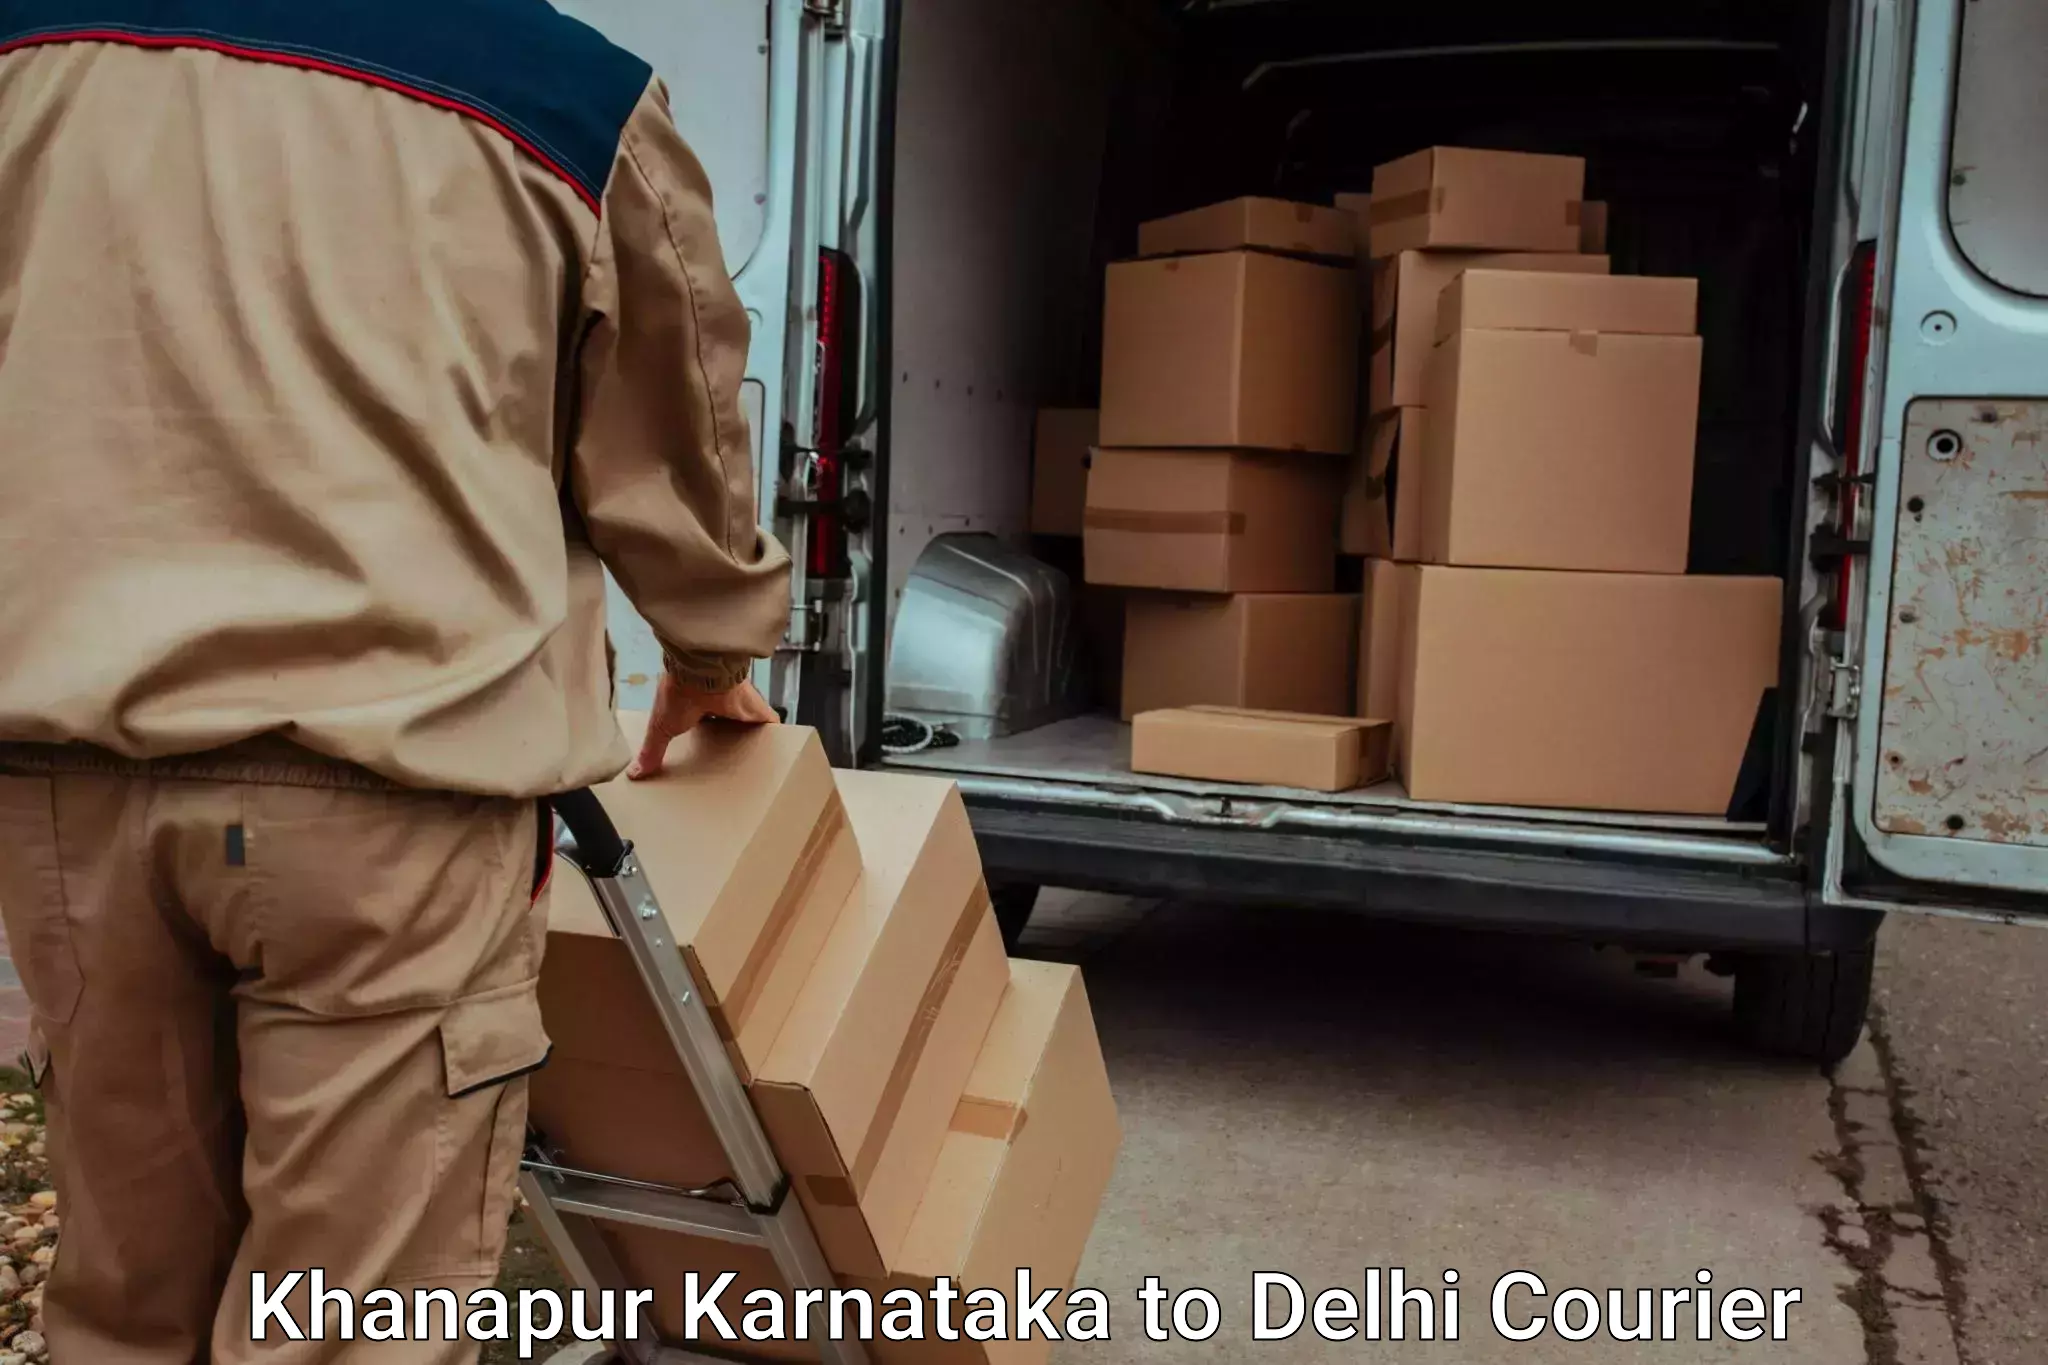 Professional moving assistance Khanapur Karnataka to University of Delhi